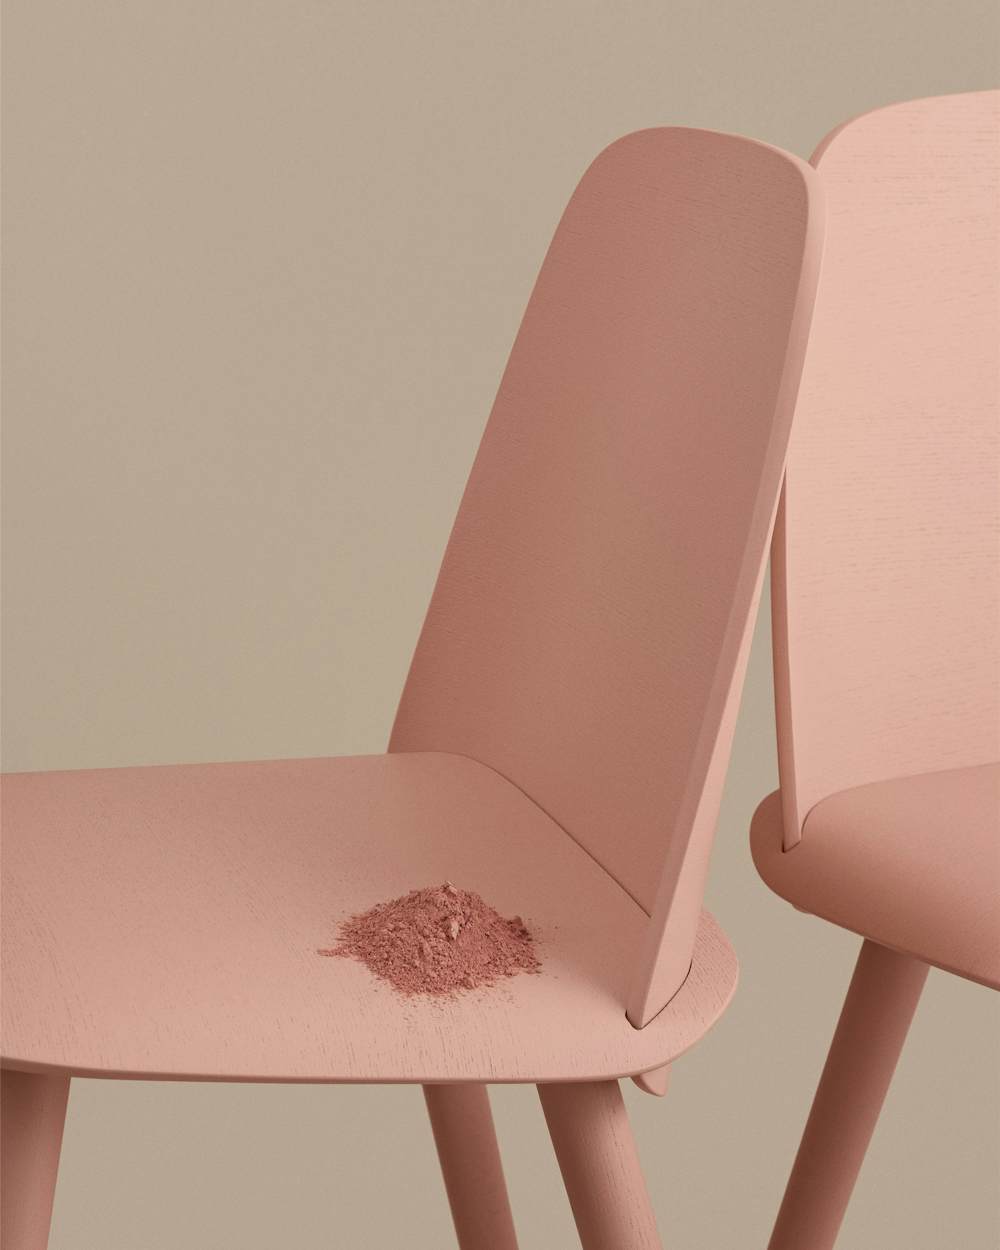 Nerd Chair concept image